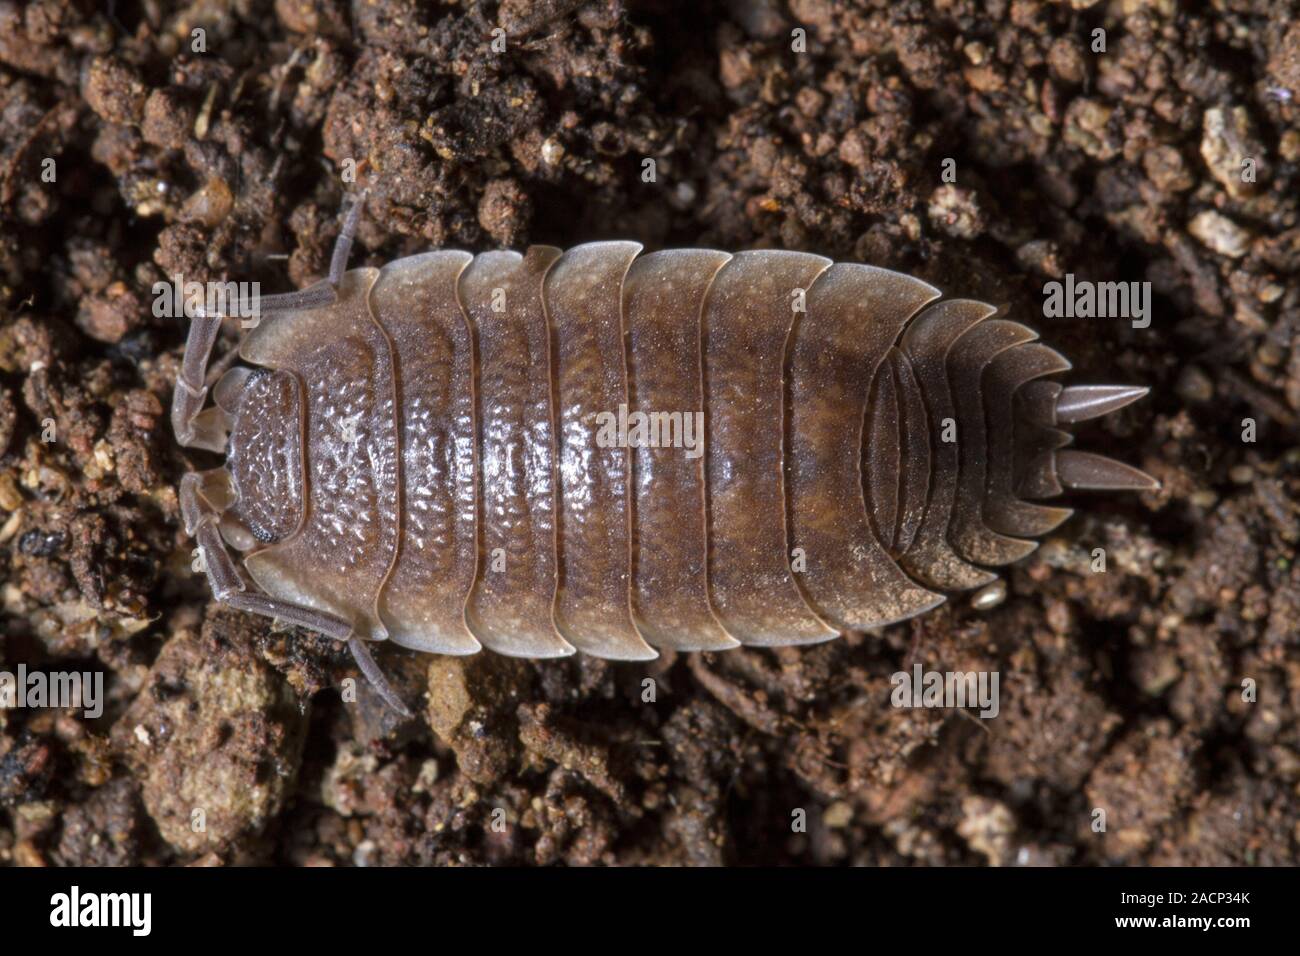 pillbug on the dirt Stock Photo